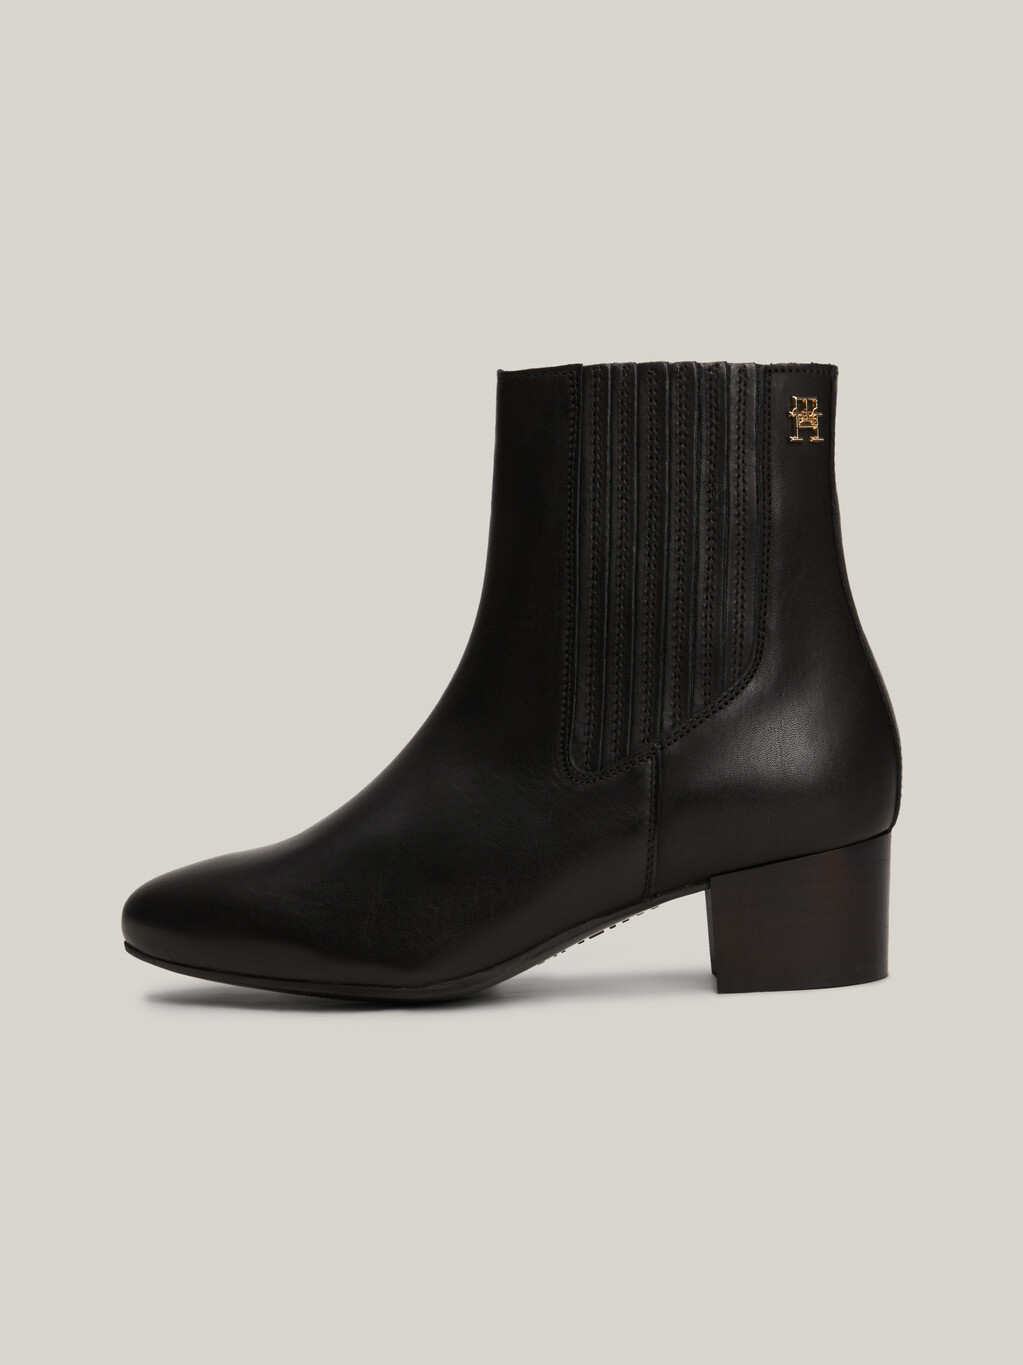 Essential Leather Block Heel Ankle Boots, Black, hi-res